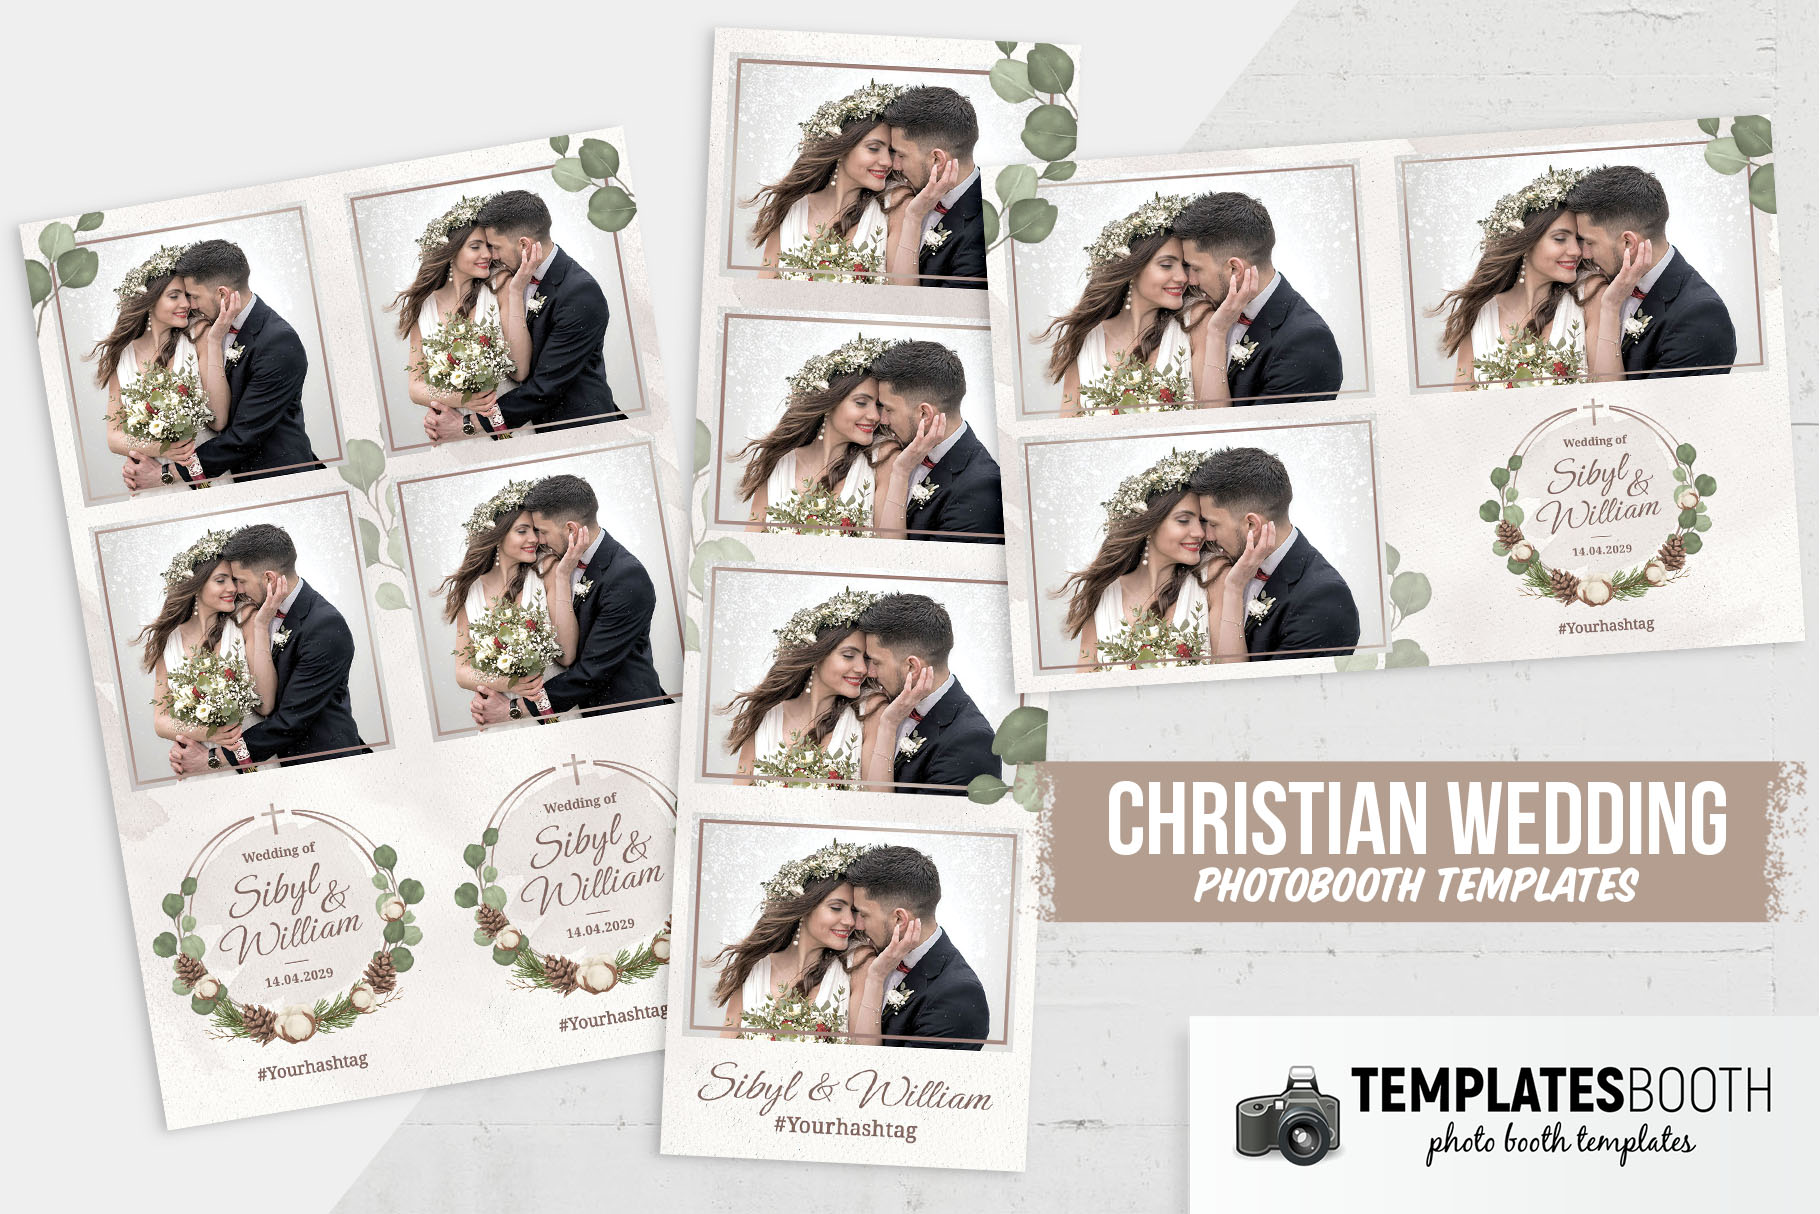 Christian Wedding Photo Booth Template - TemplatesBooth